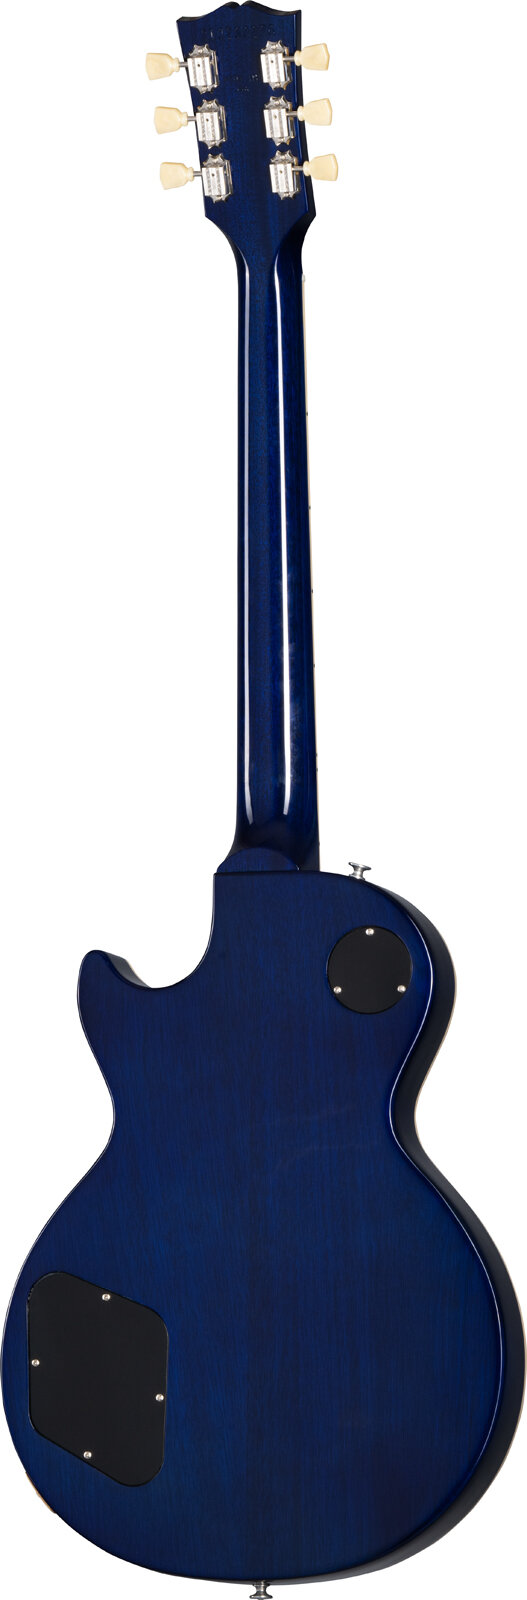 Gibson Les Paul Standard 50s Figured Top Blueberry Burst0